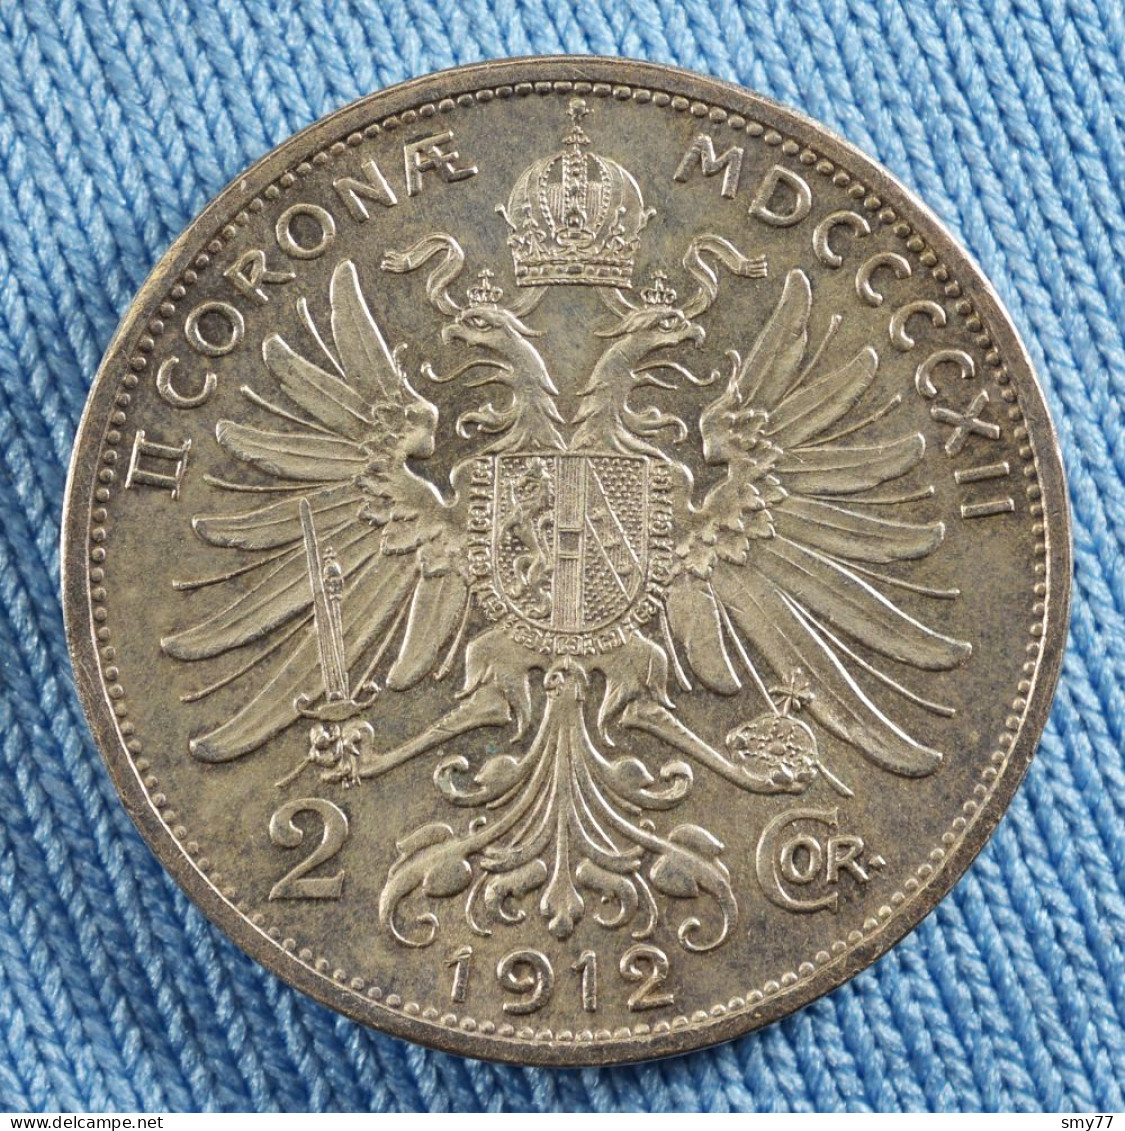 Autriche / Austria • 2 Corona / Couronnes 1912 • Franz Joseph I  [24-038] - Autriche